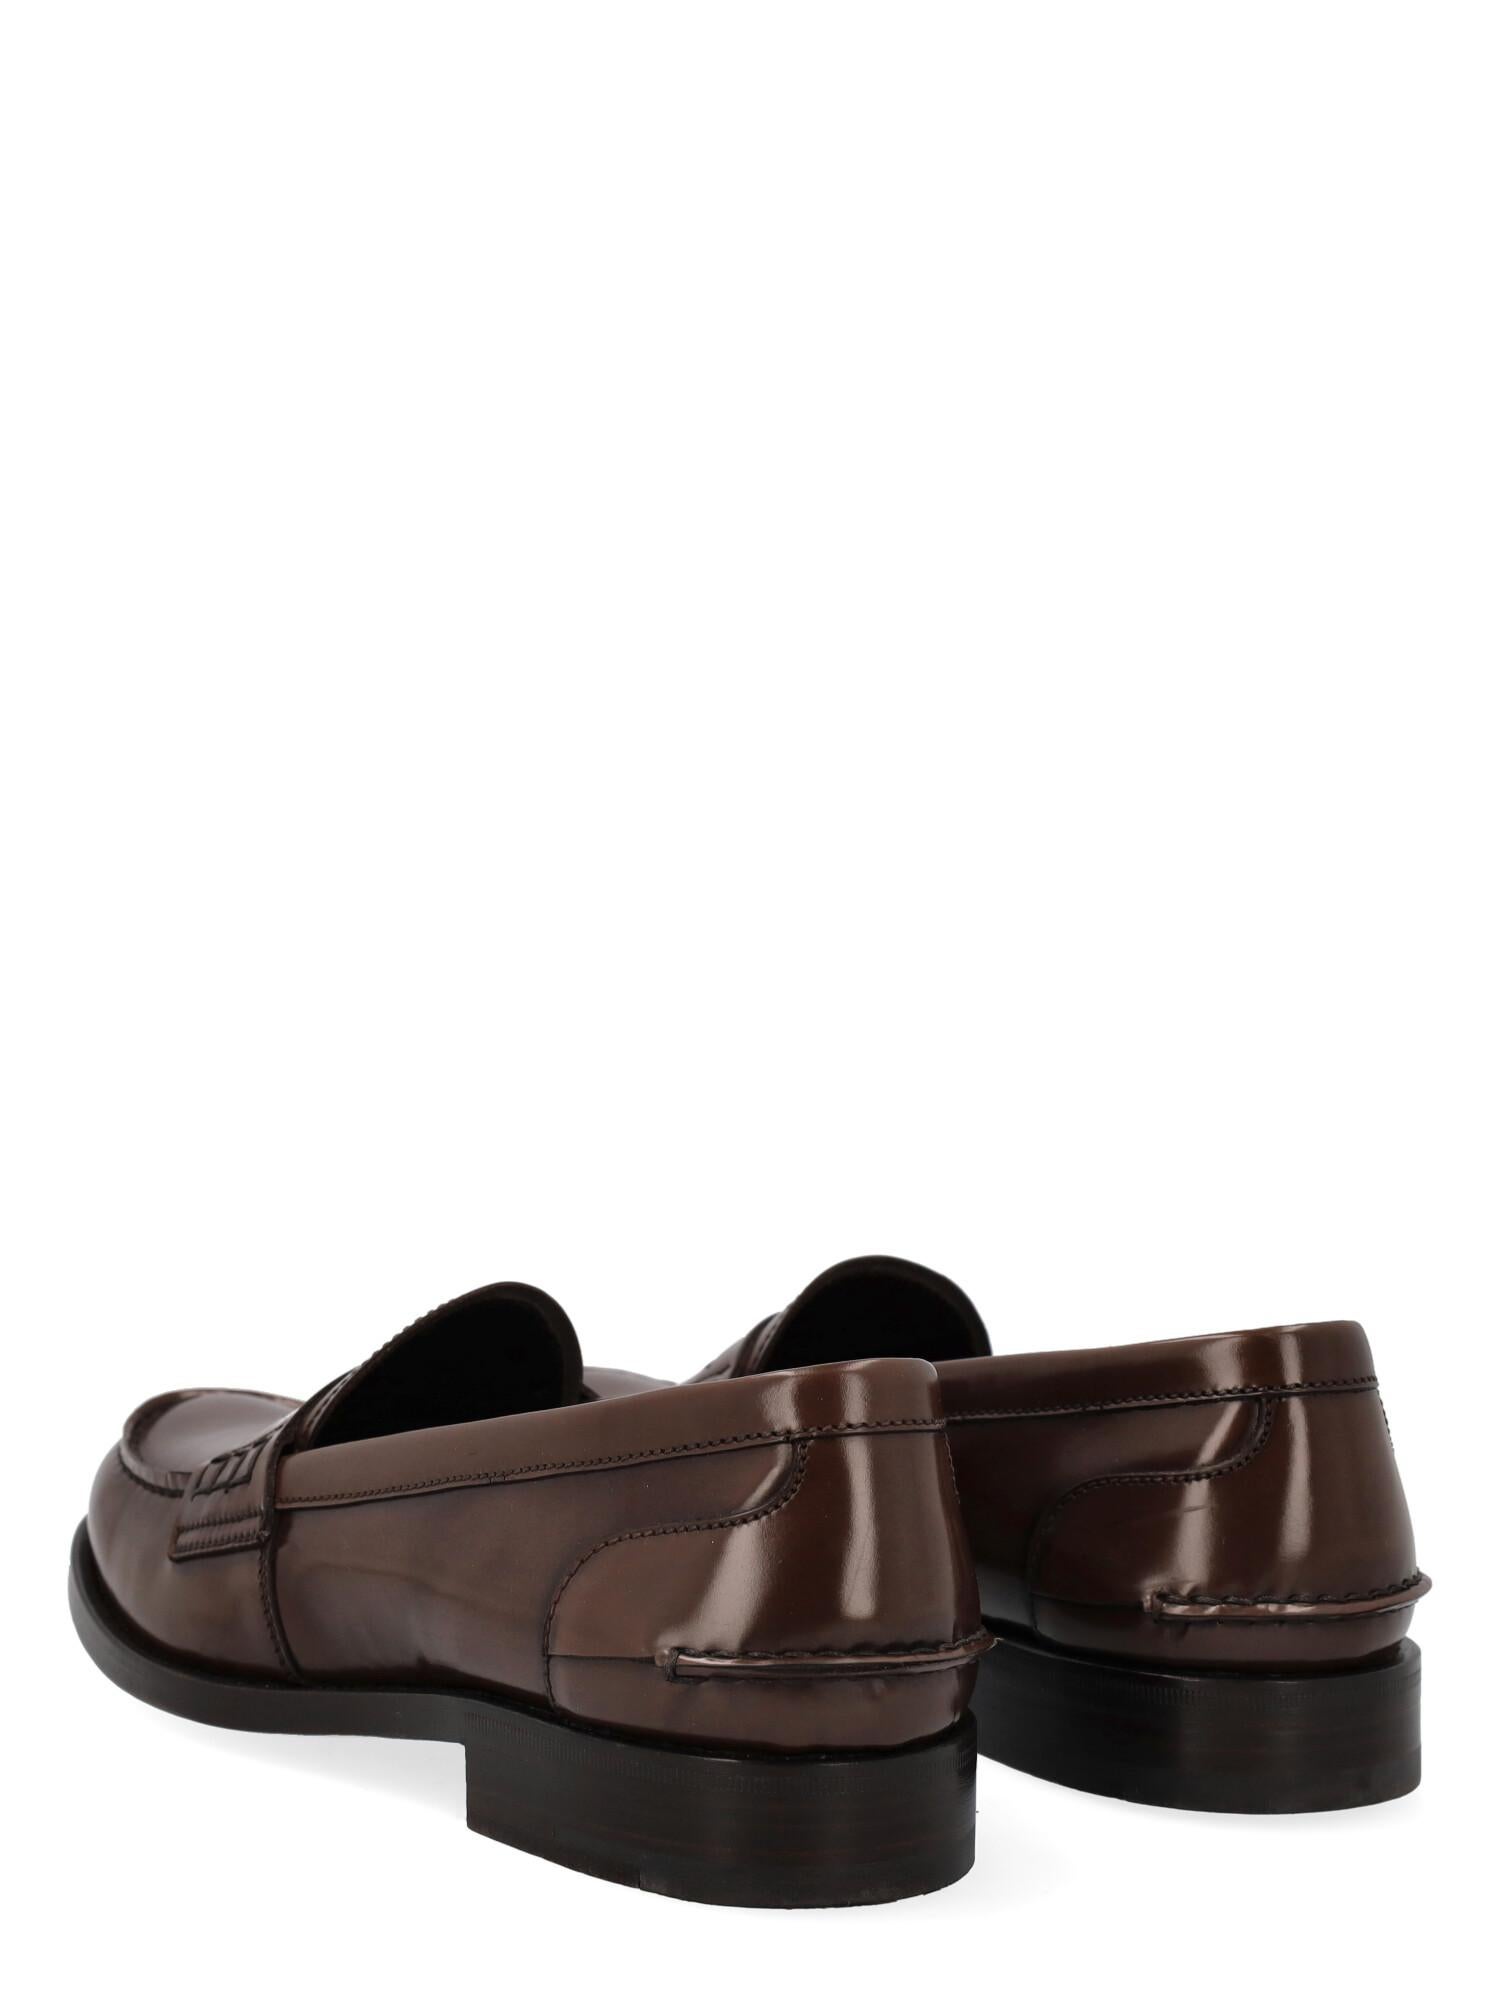 Black Prada Women Loafers Brown Leather EU 38.5 For Sale